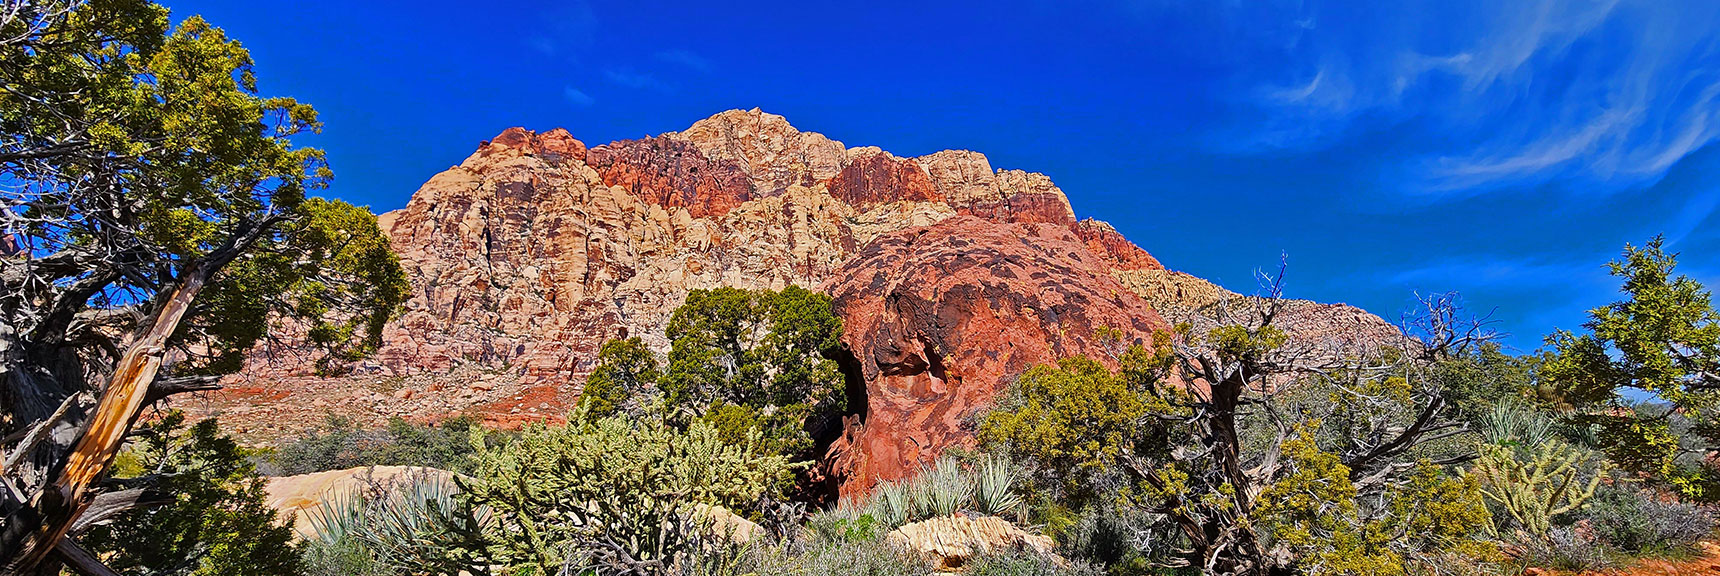 Huge Artistic Boulder on Dales Trail | Dales Trail | Red Rock Canyon National Conservation Area, Nevada | David Smith | LasVegasAreaTrails.com